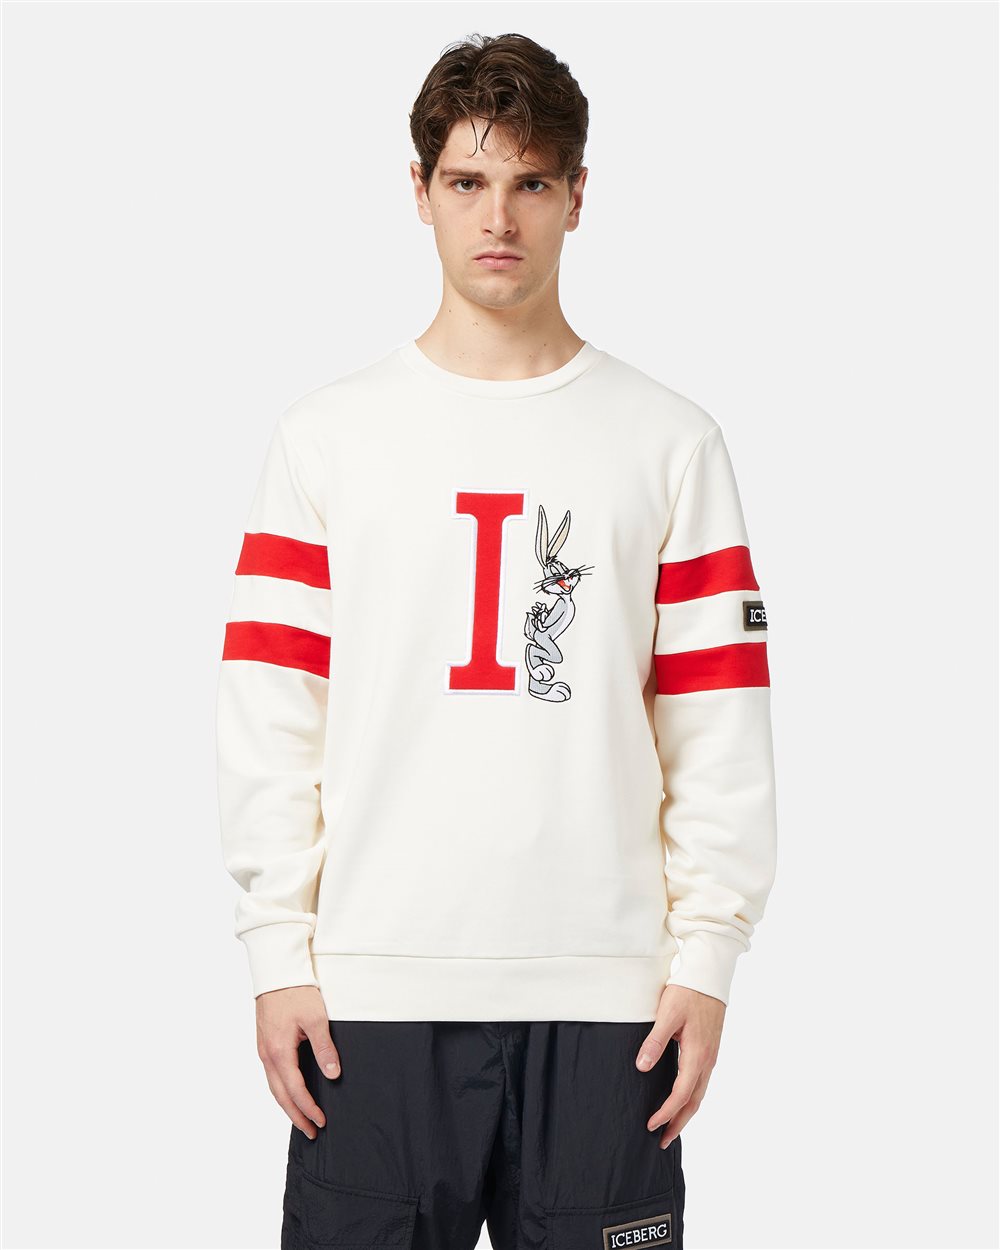 Sweatshirt with logo and Bugs Bunny - Iceberg - Official Website